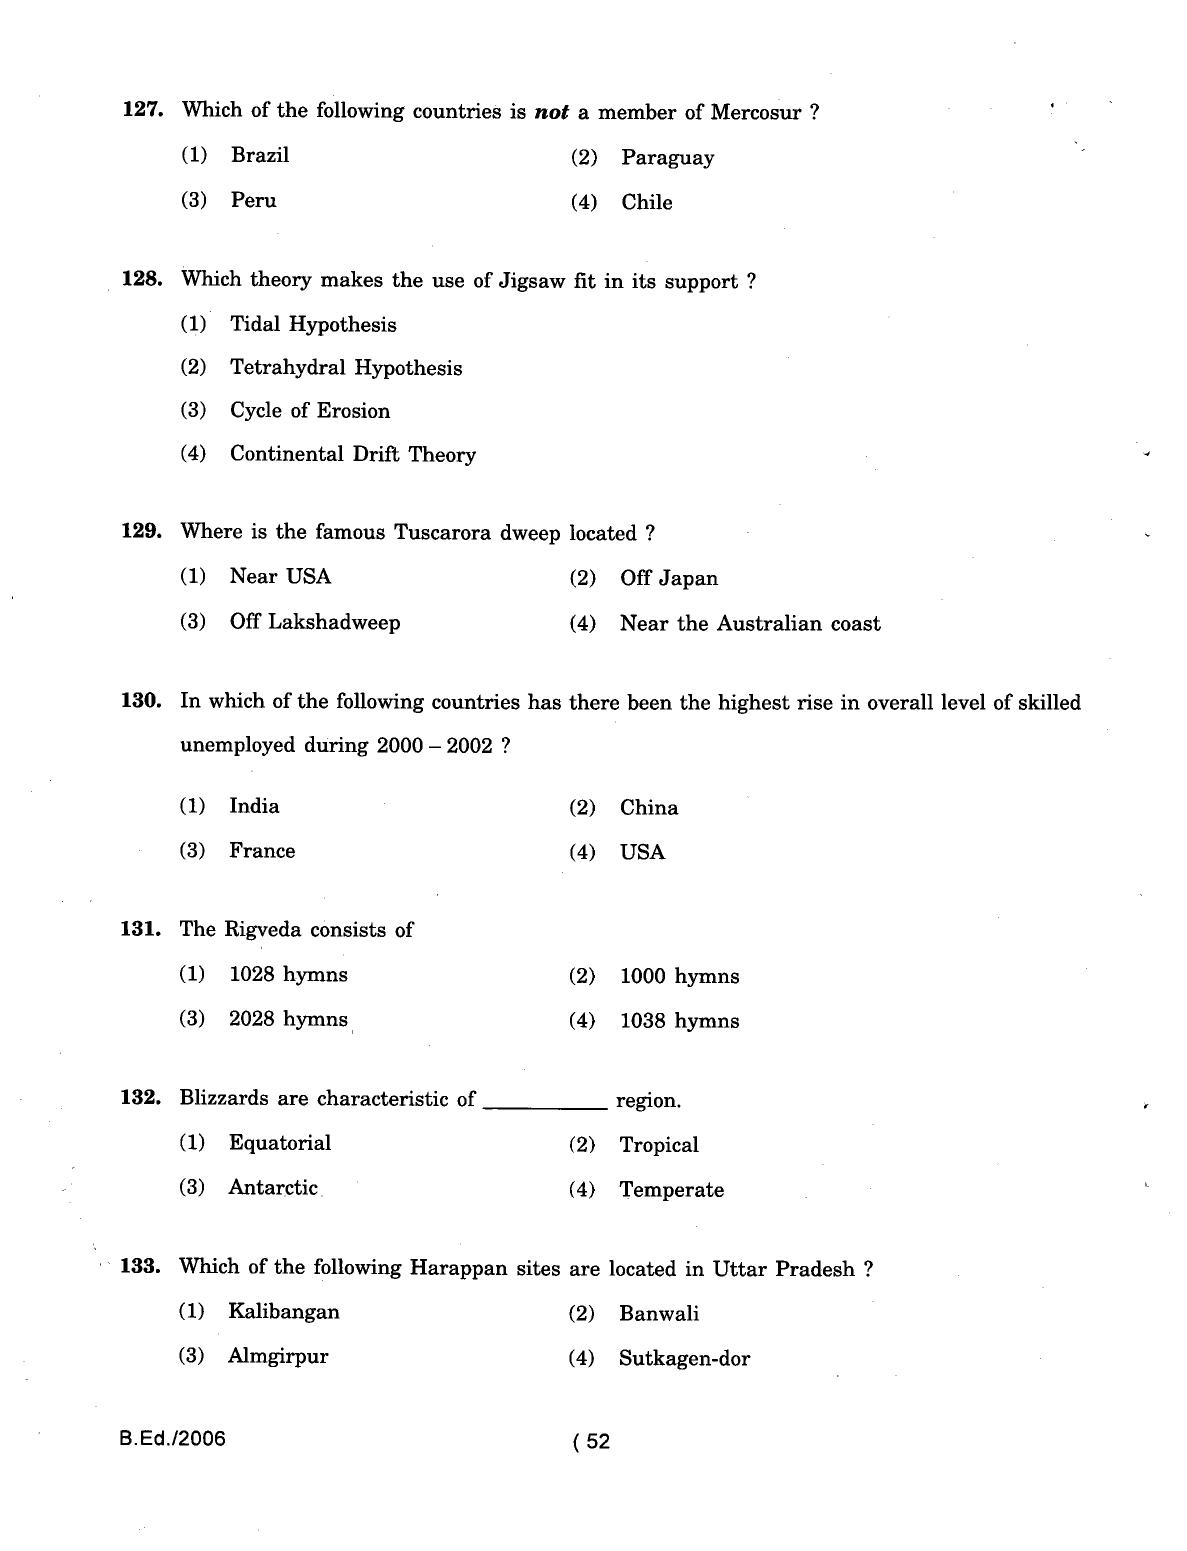 IGNOU B.Ed 2006 Question Paper - Page 52